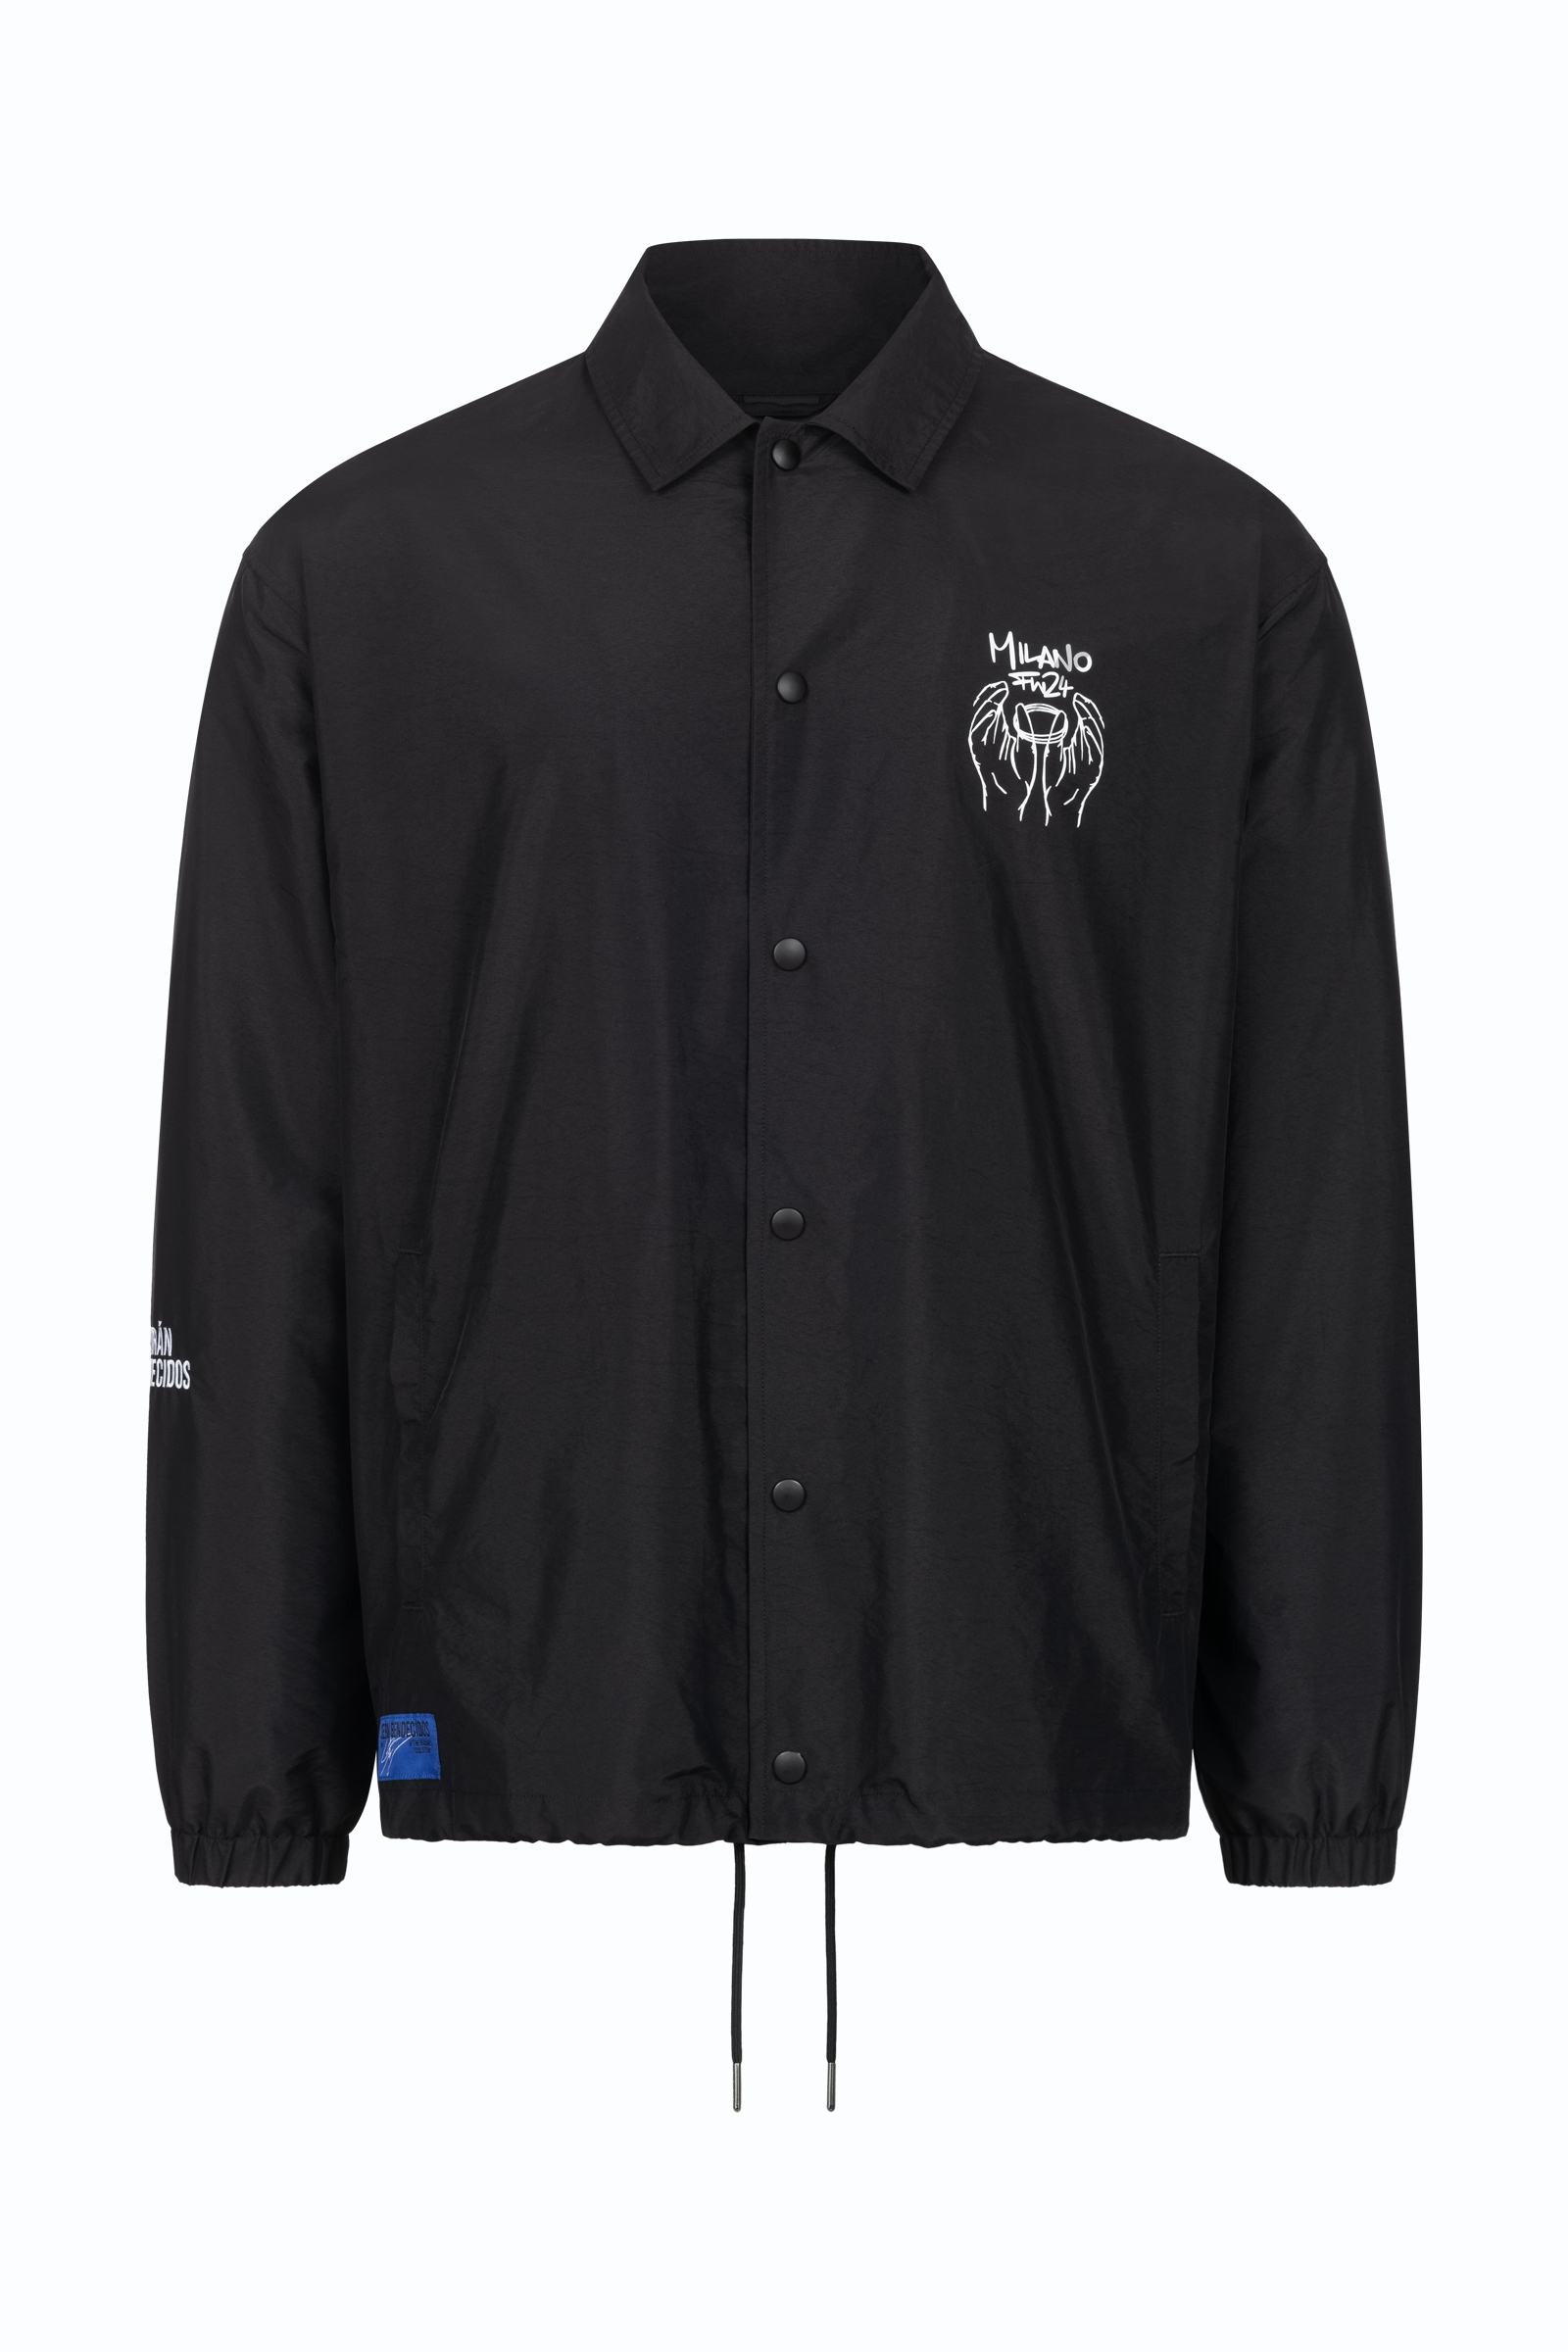 SB Coach Jacket (limited Edition)